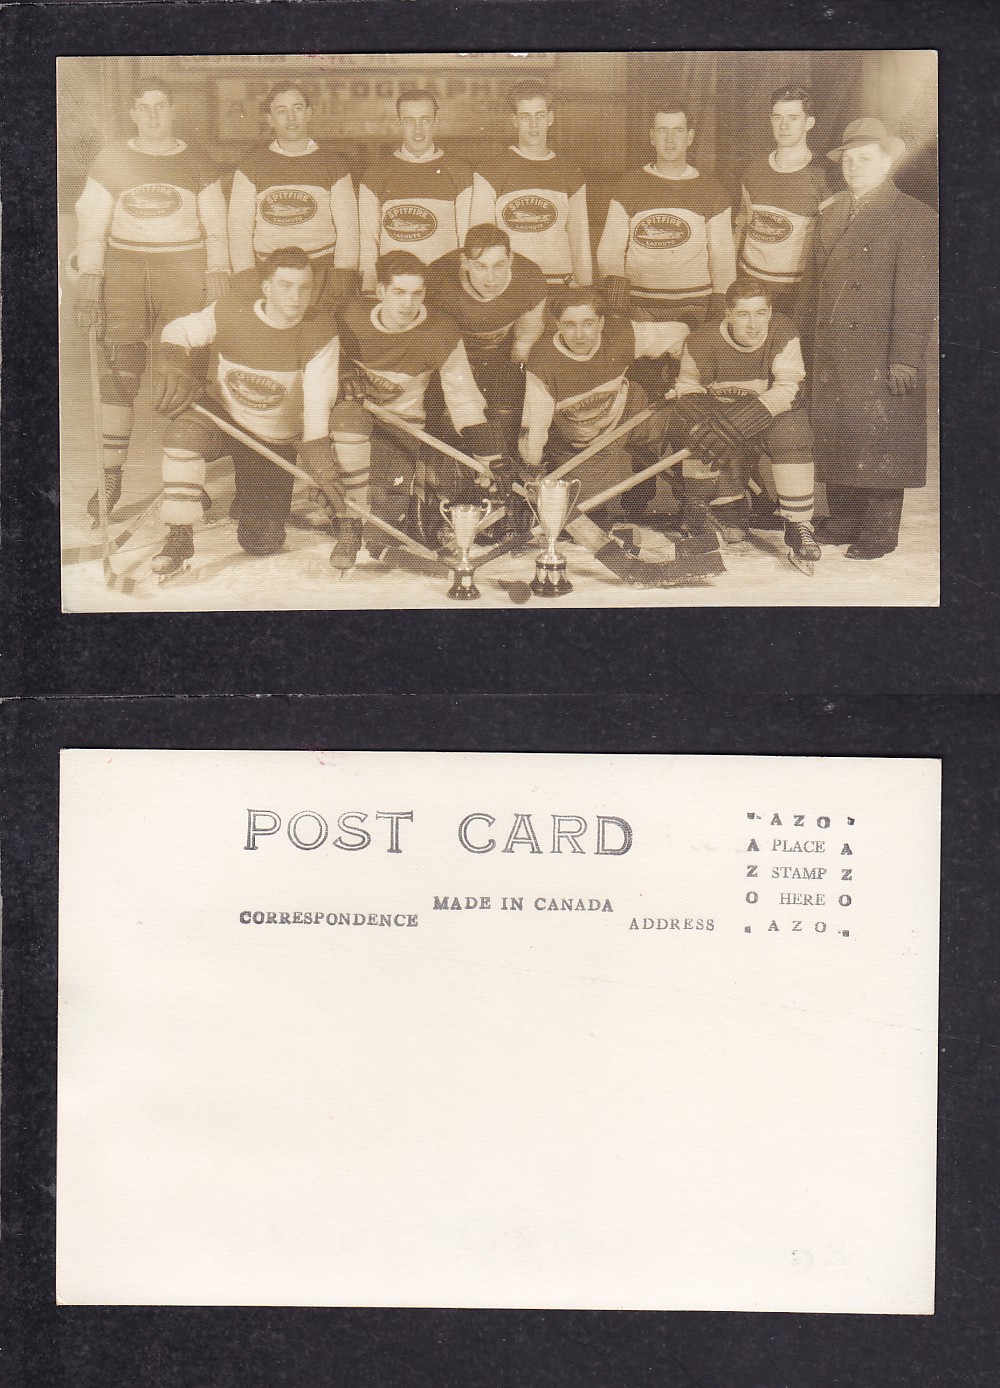 1920'S CACHUTE PITFIRE HOCKEY TEAM POST CARD photo